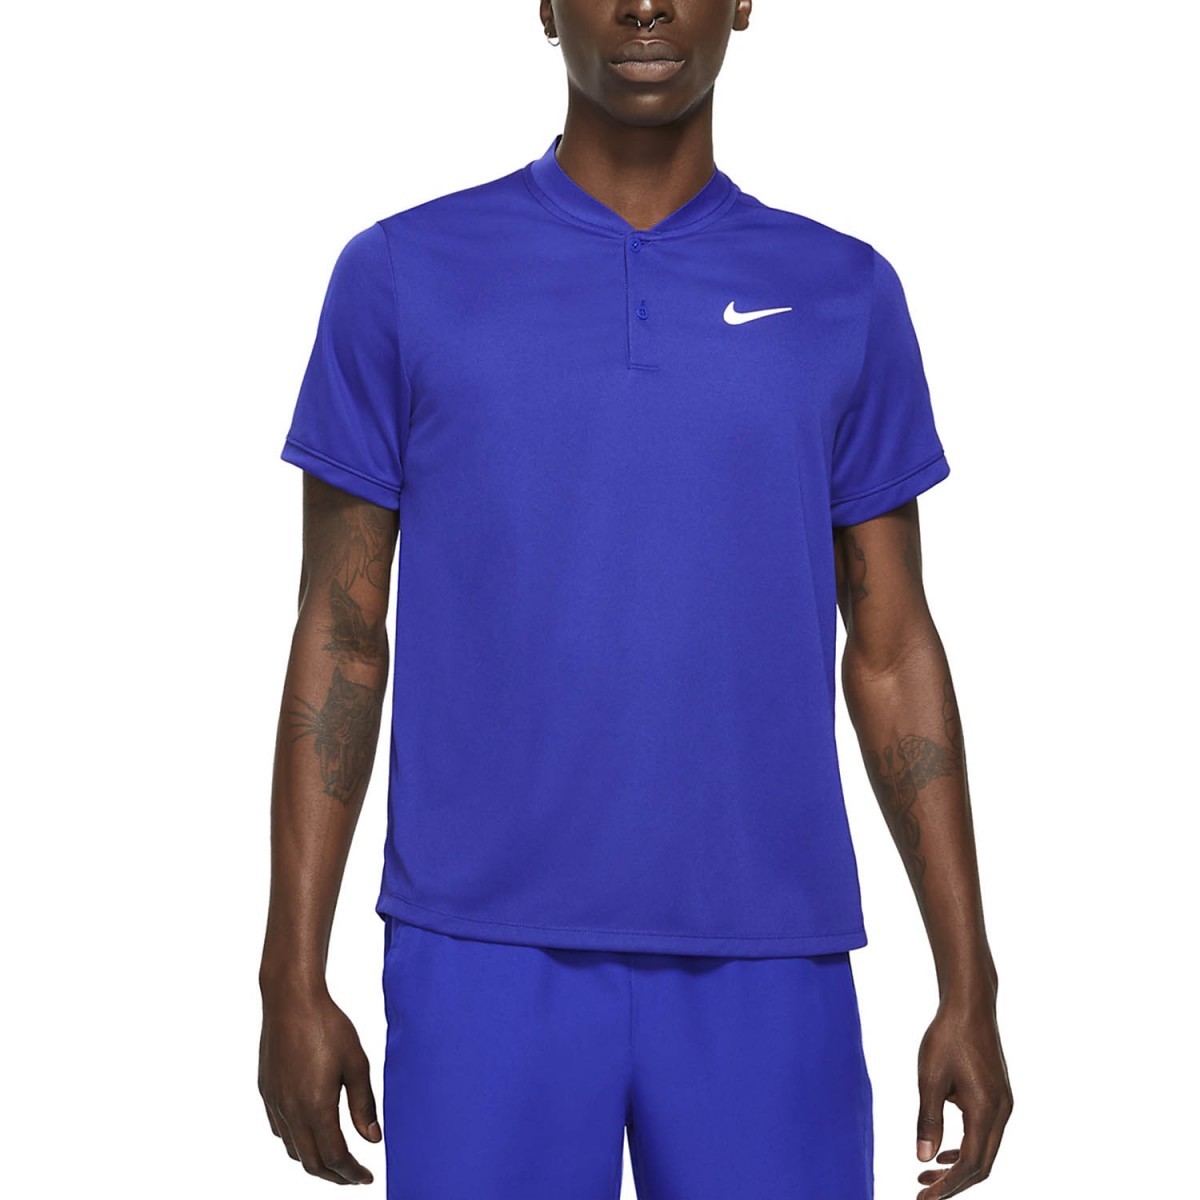 Теннисная футболка мужская Nike Court Polo Blade concord/white